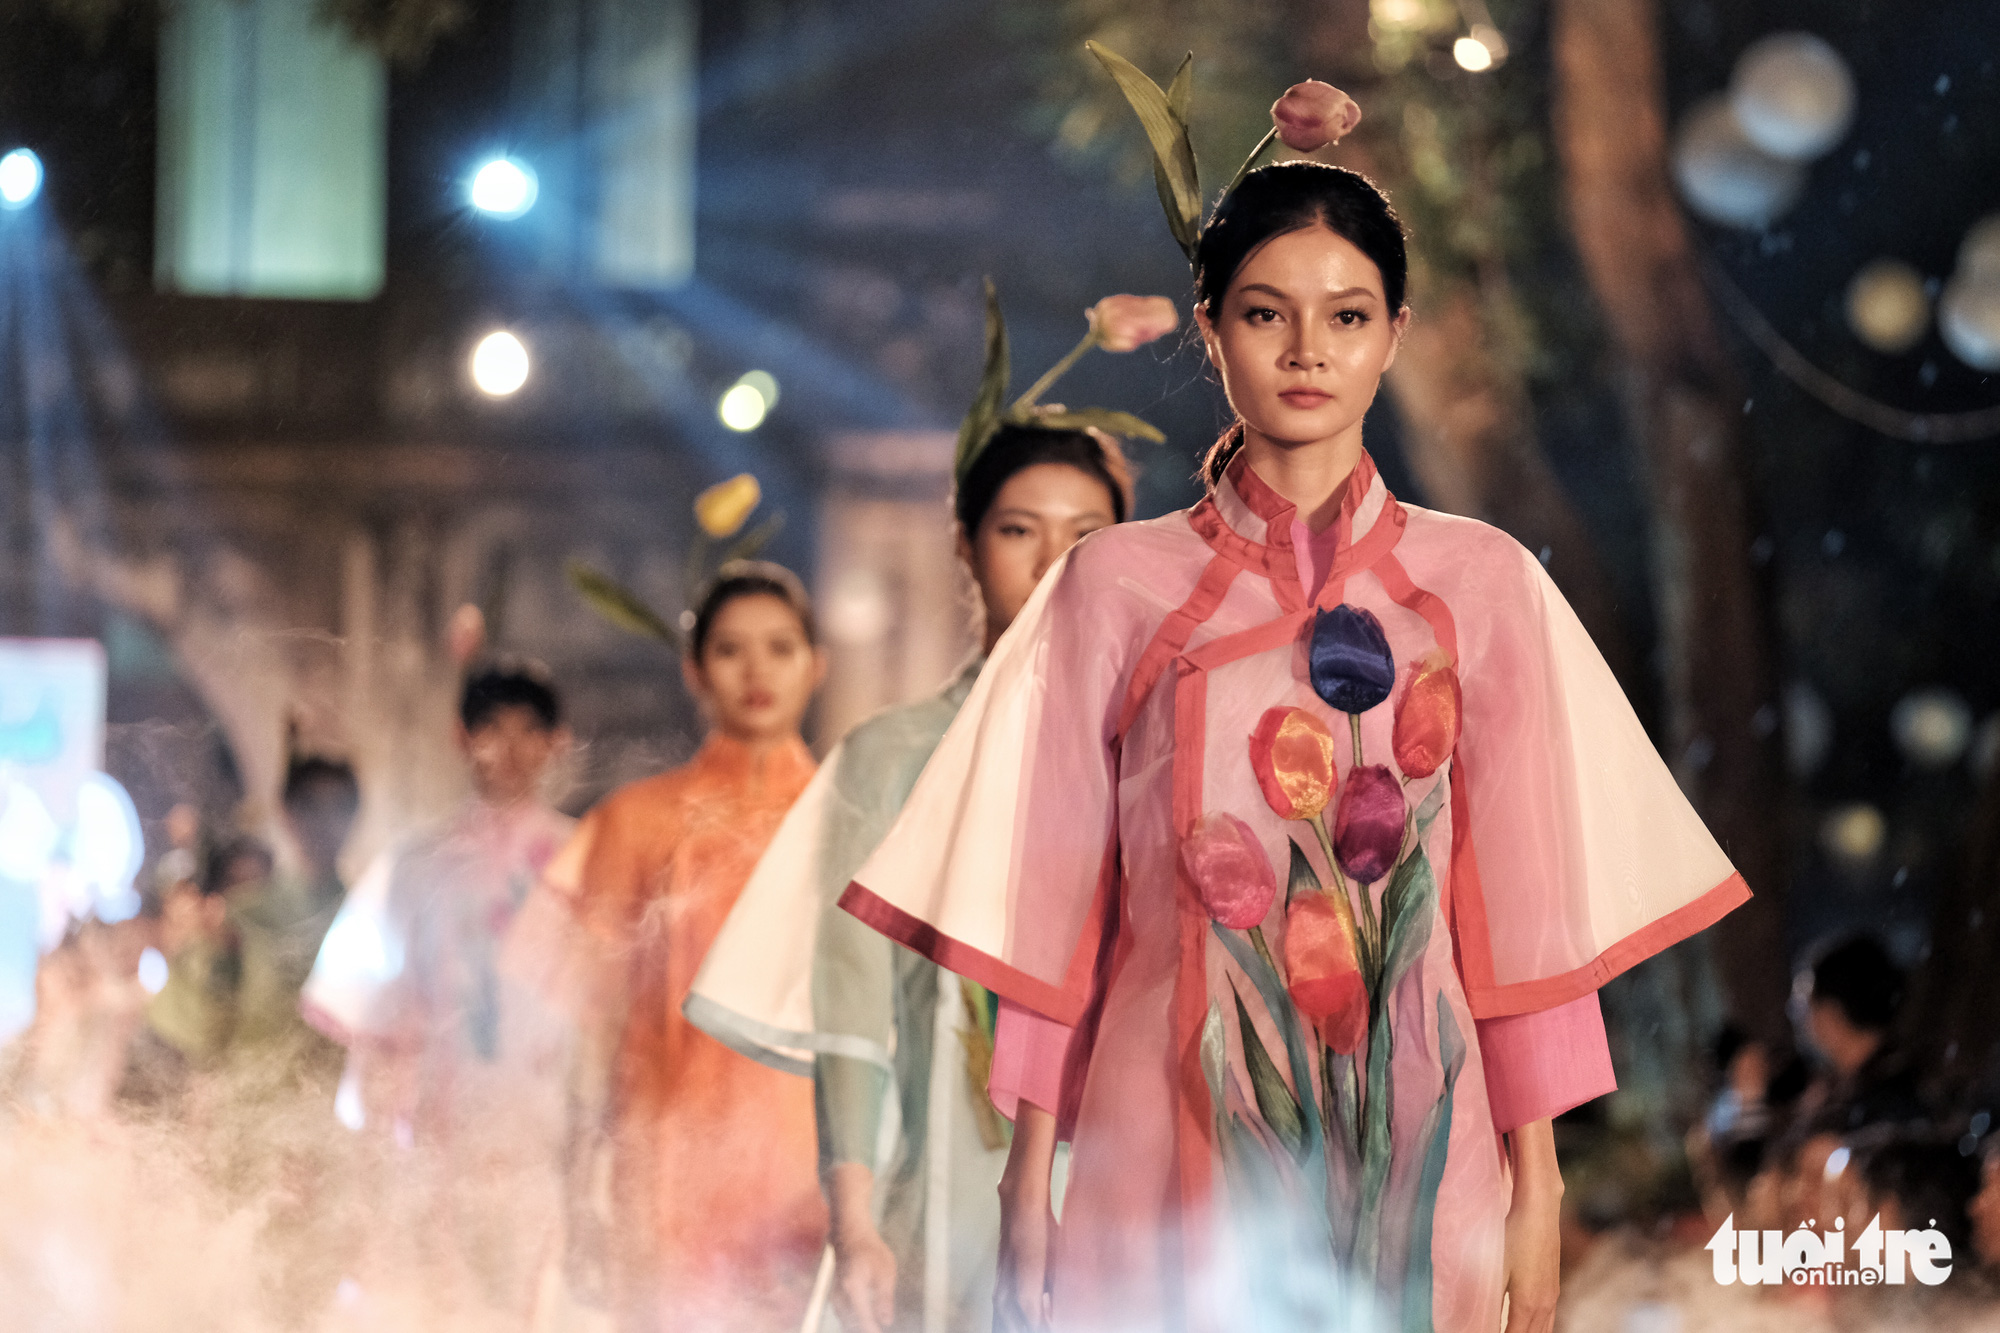 Hanoi ao dai fashion show honors Vietnam’s heritage, women beauty